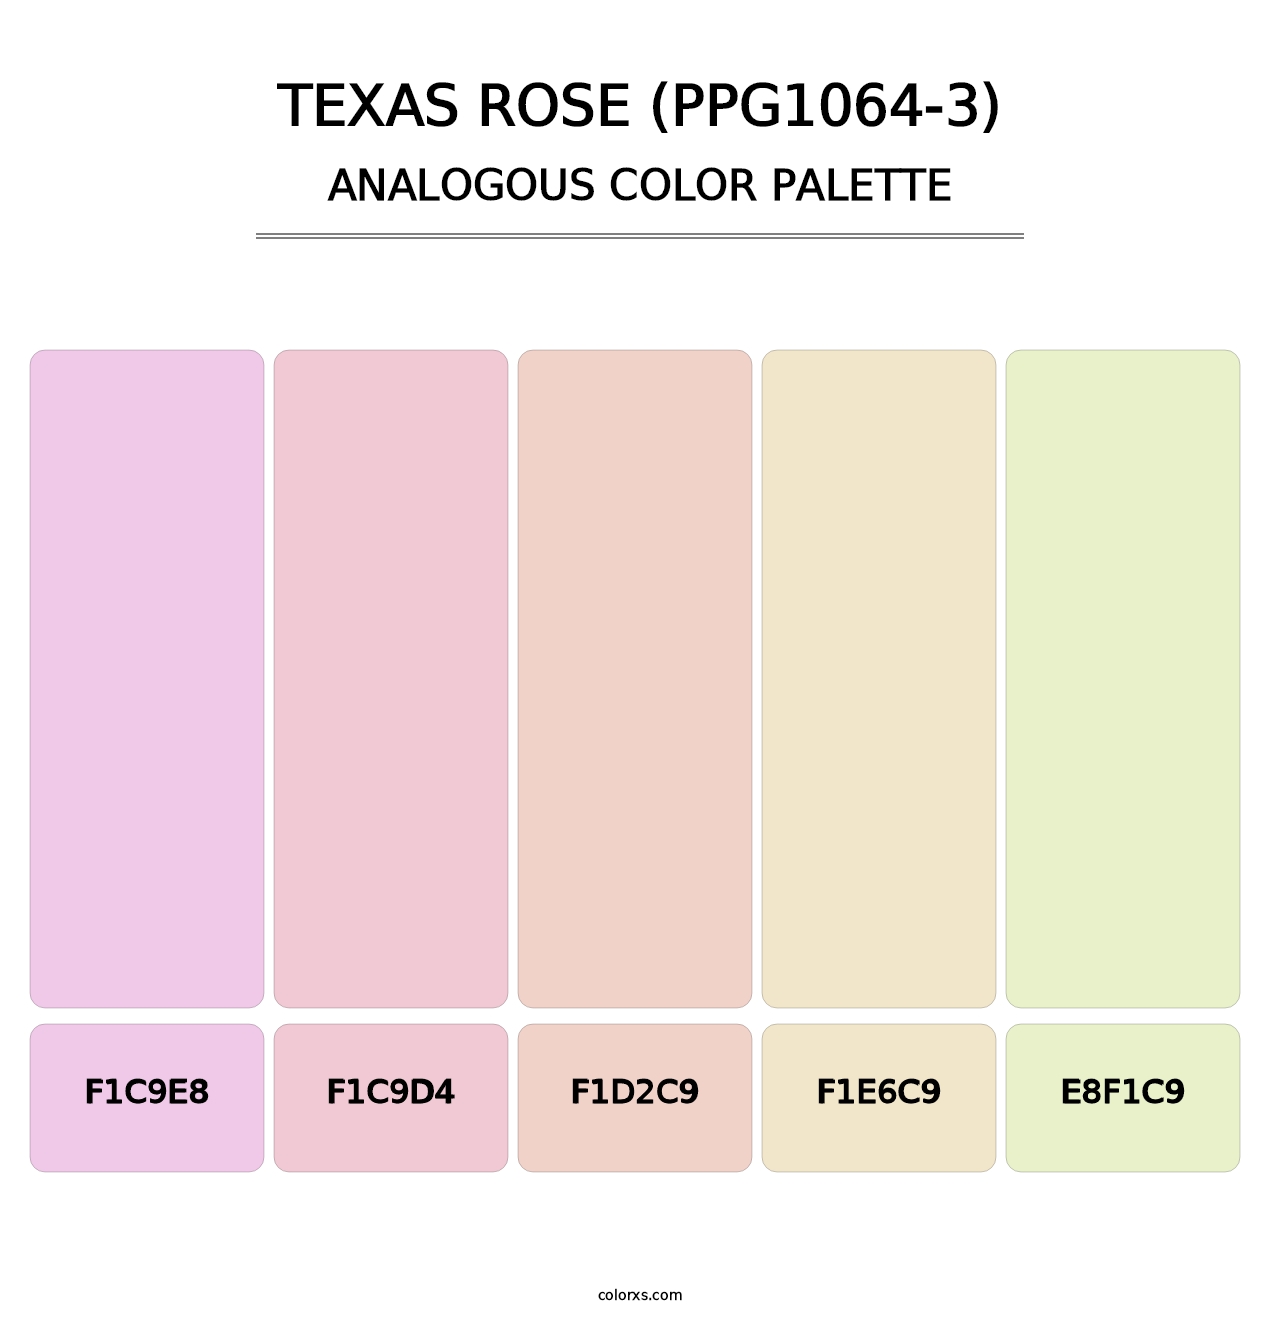 Texas Rose (PPG1064-3) - Analogous Color Palette